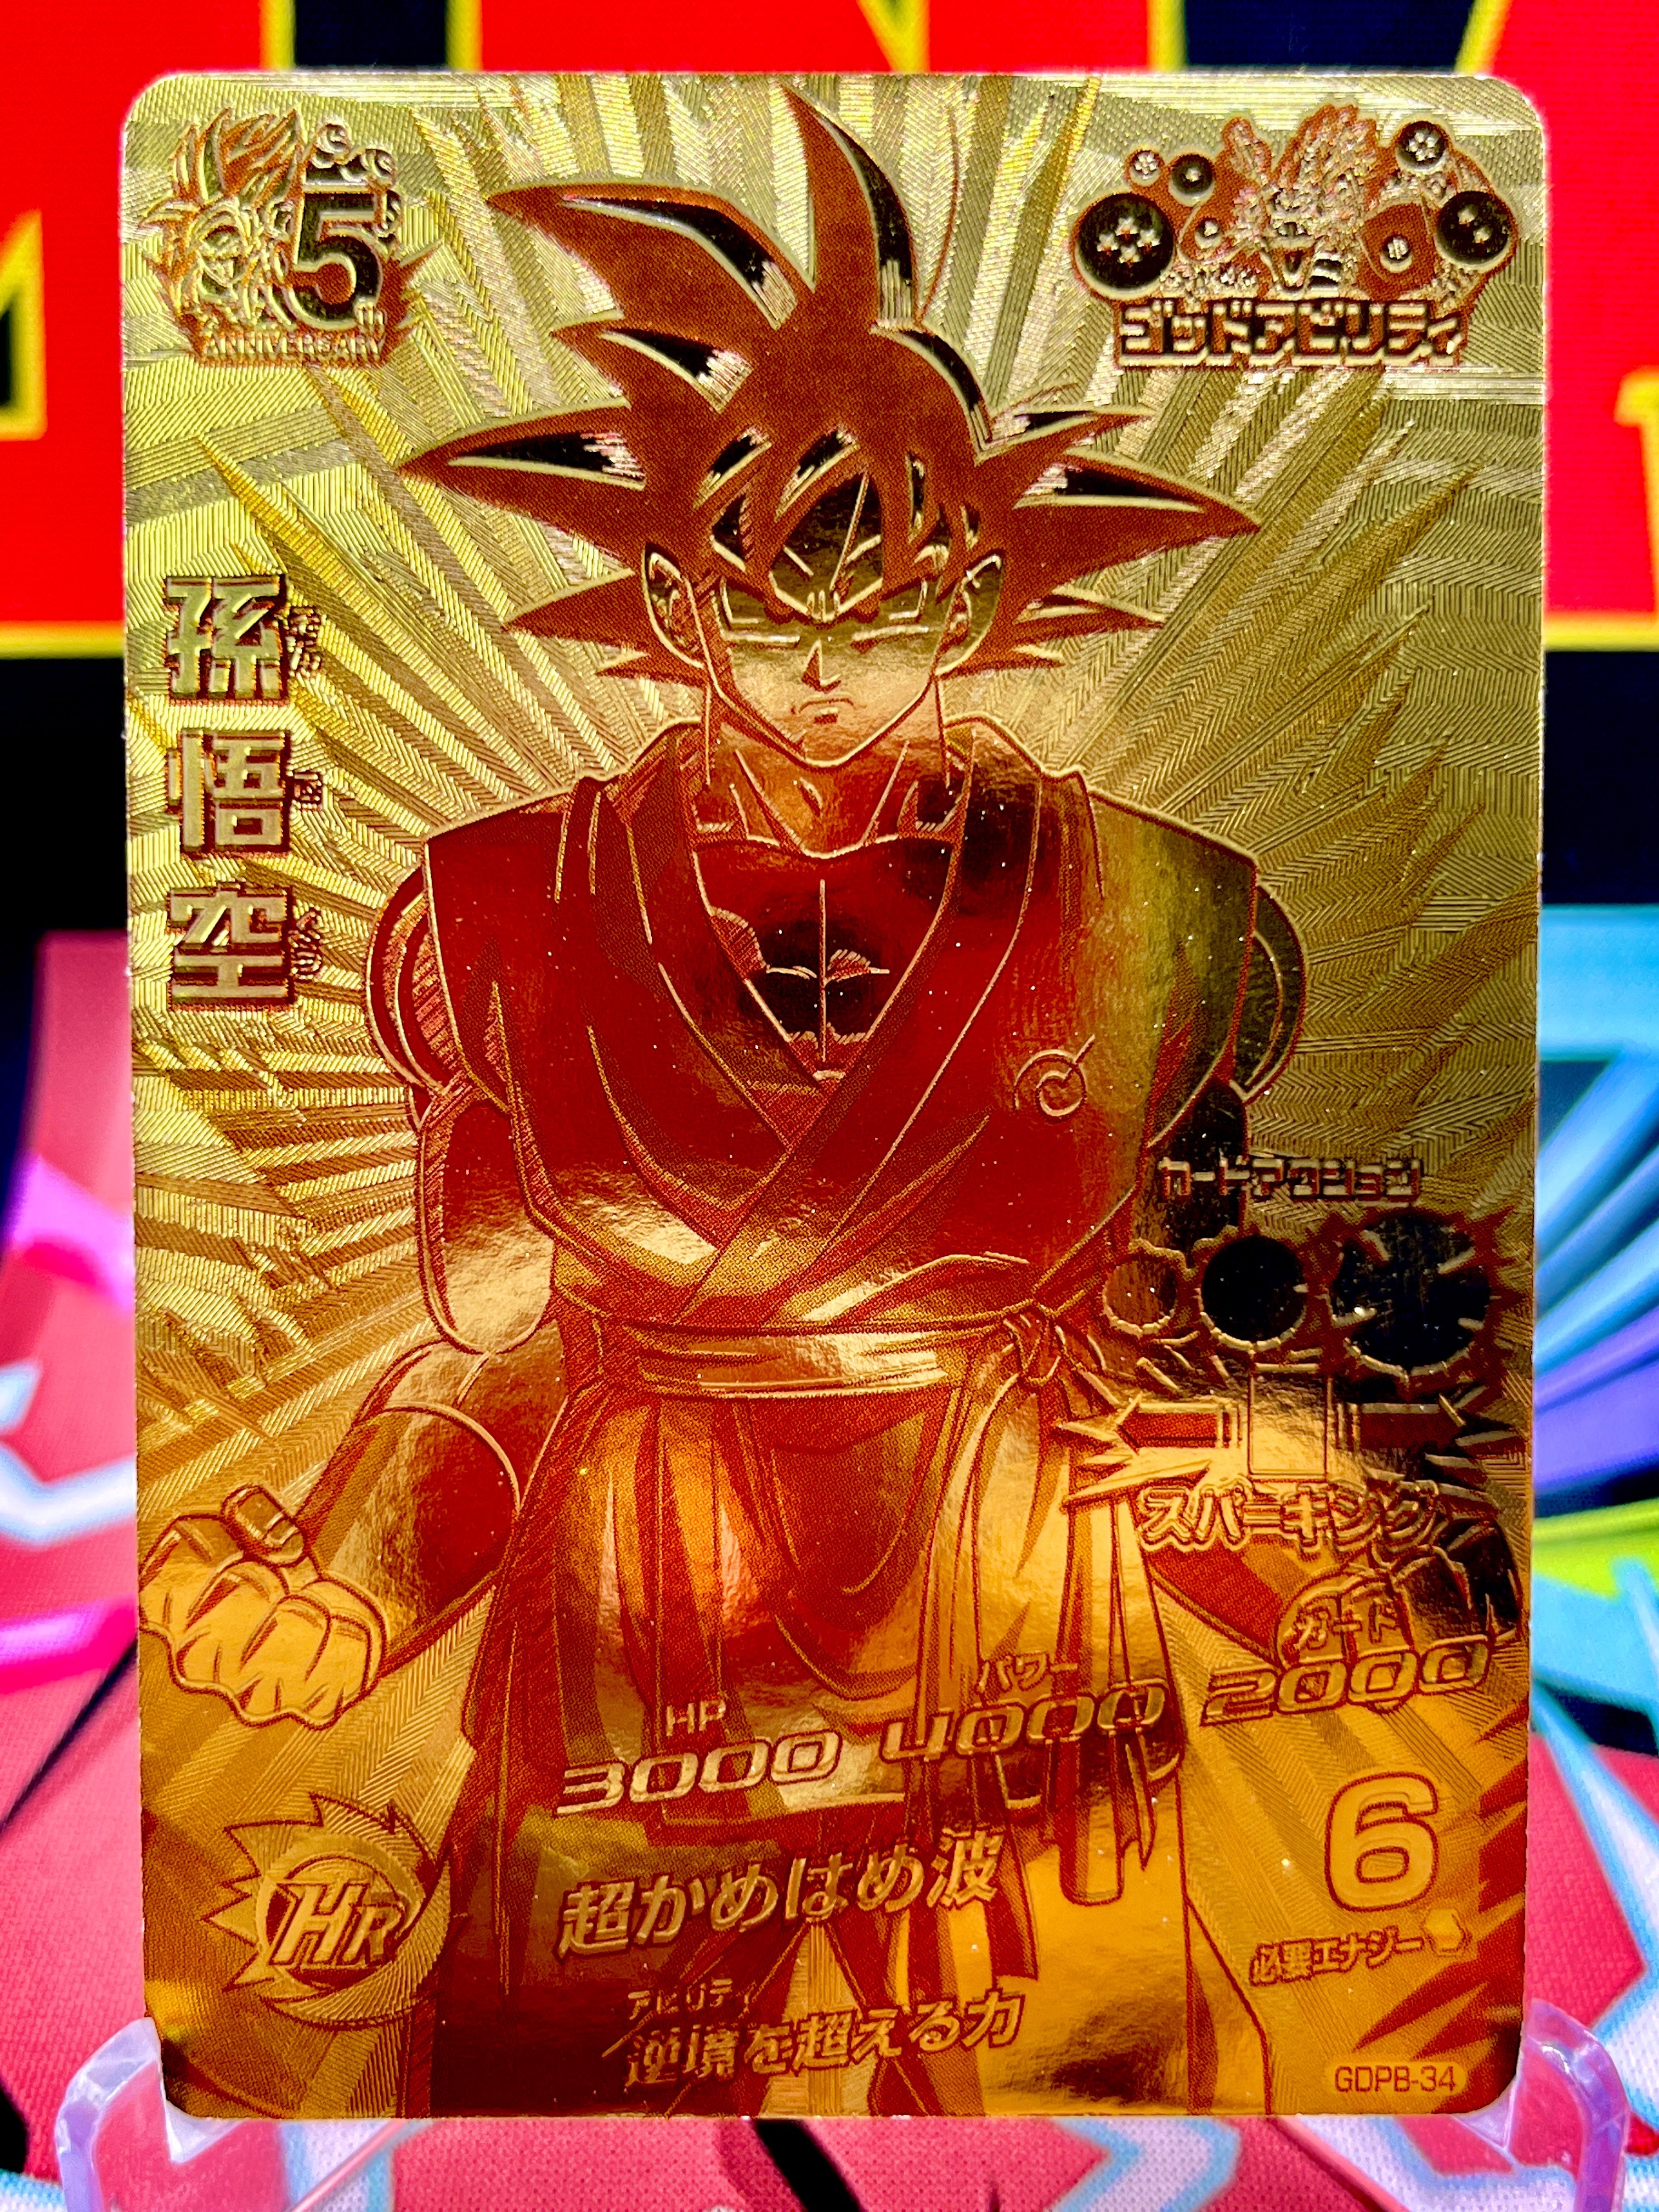 GDPB-34 Son Goku Vintage Promo (2015)